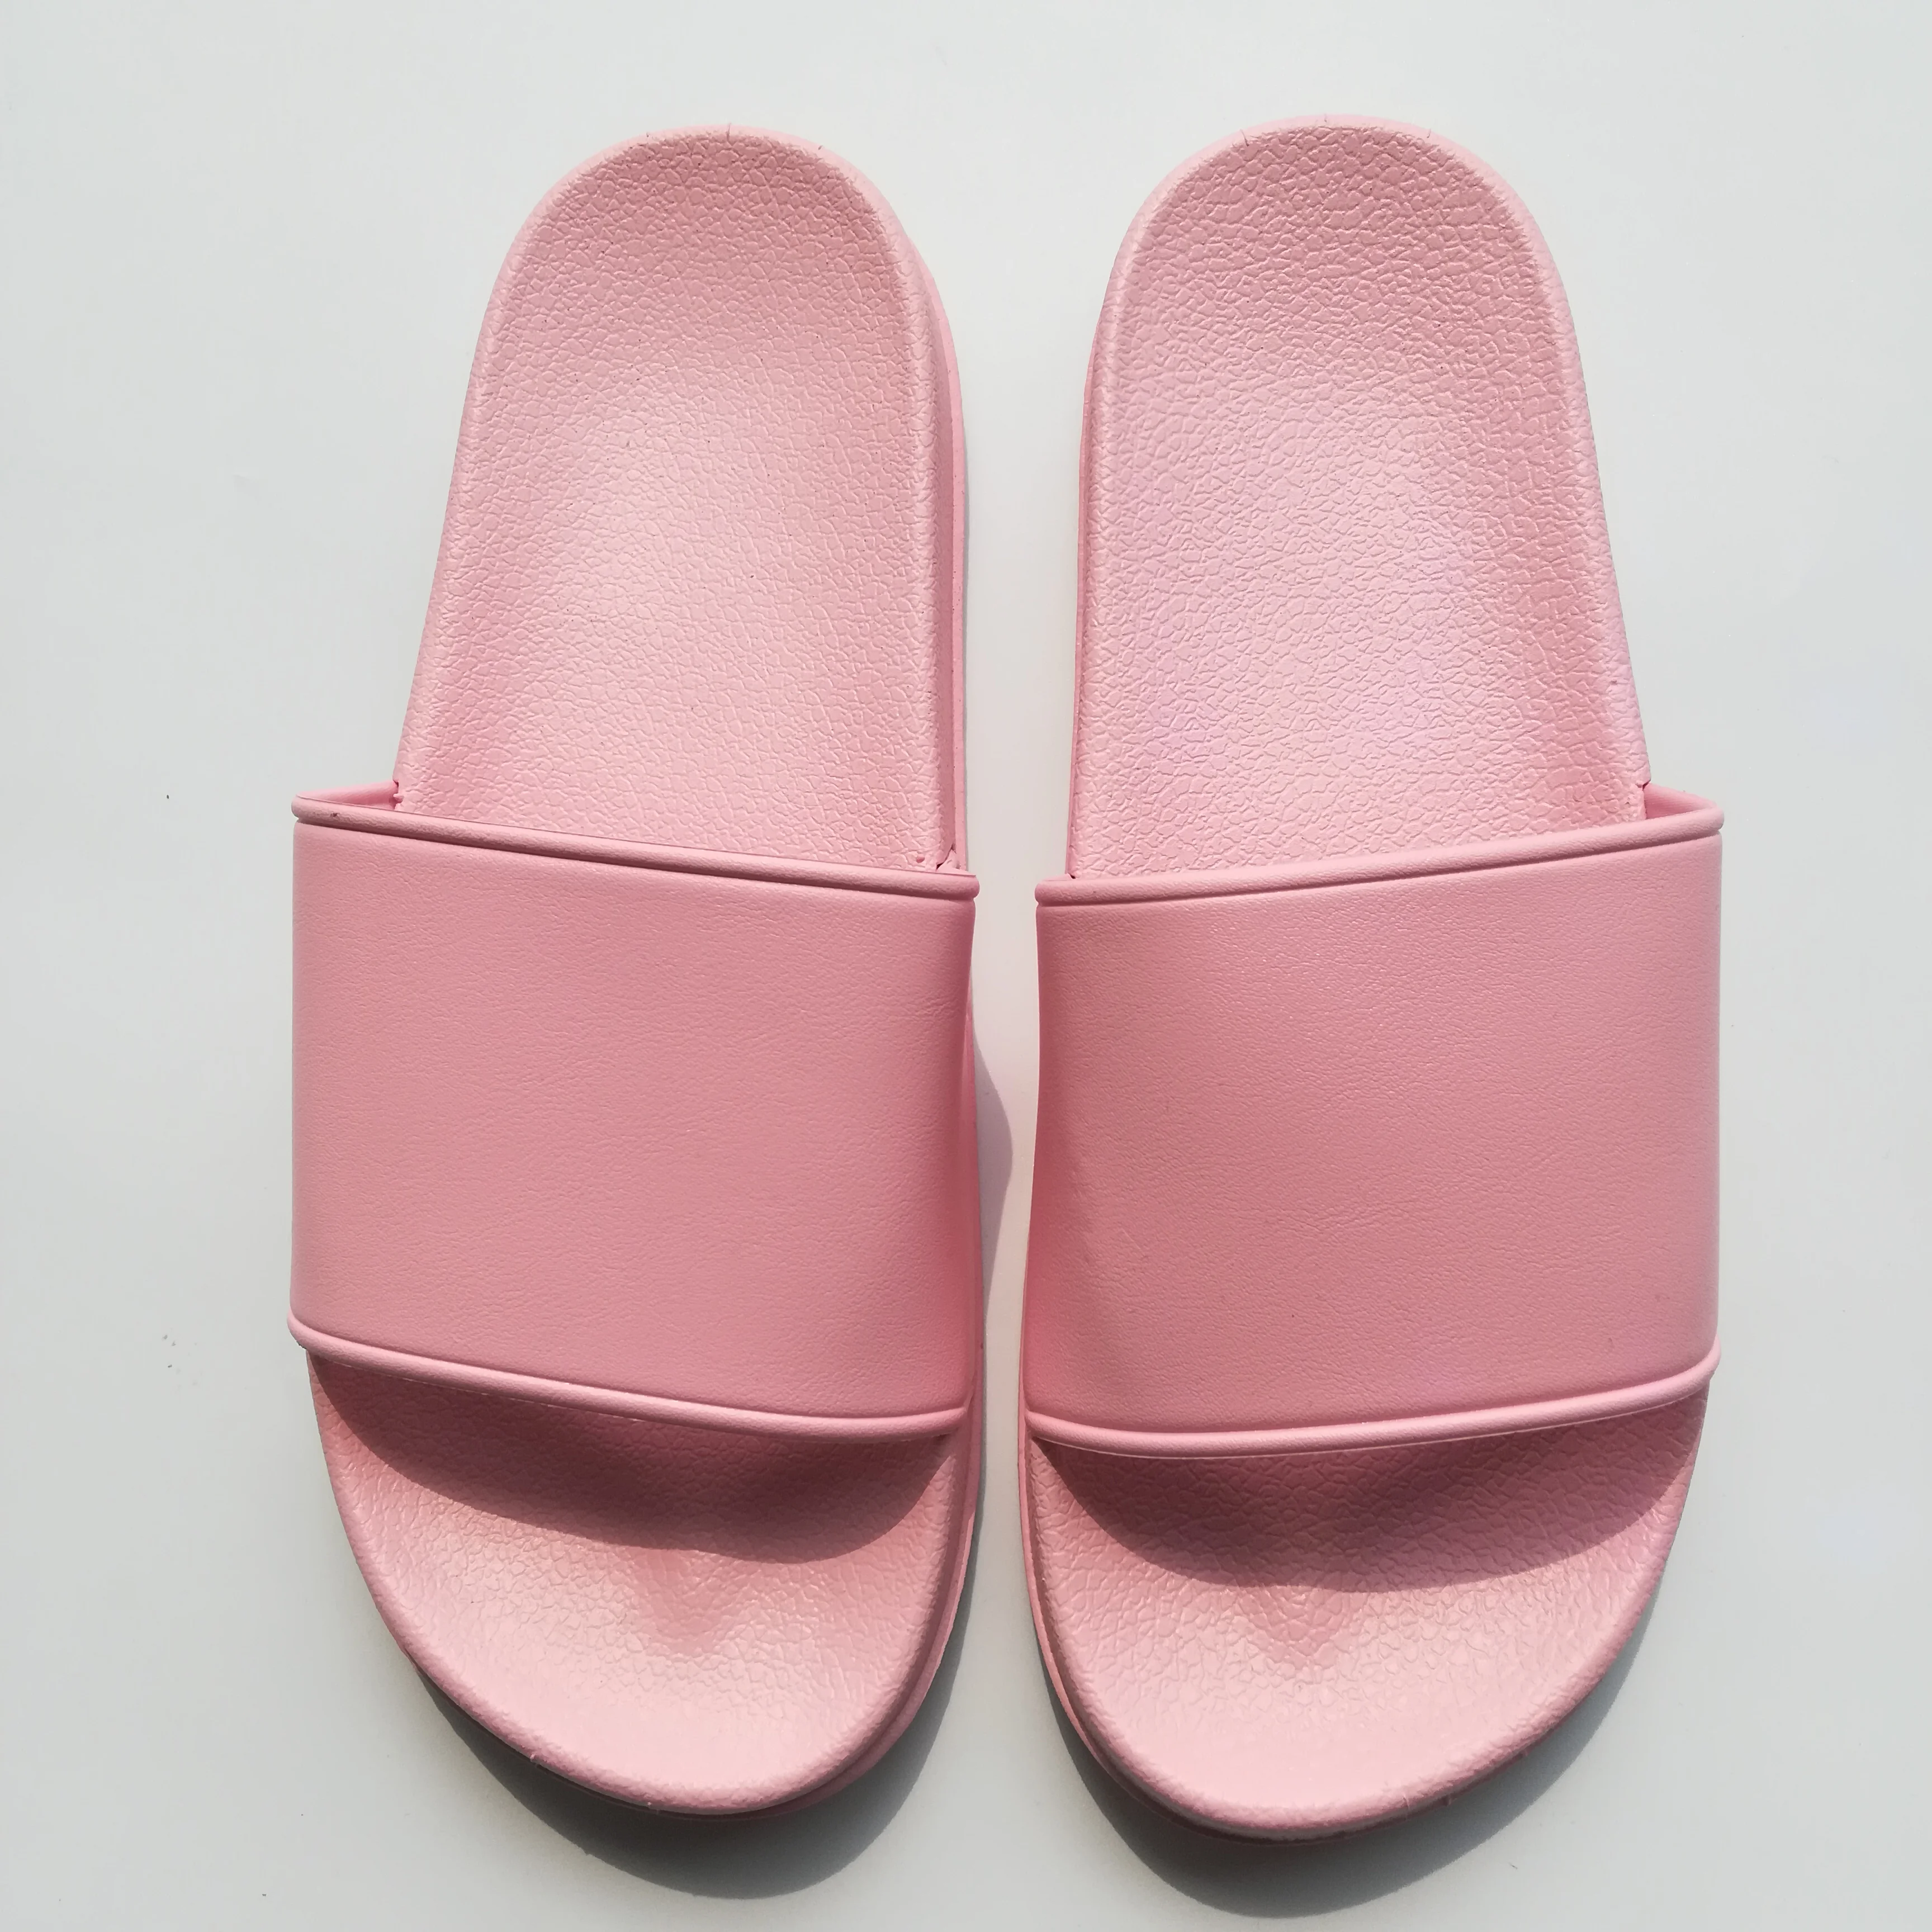 US$ 40.00 - BLMGP Green Pink Customized Mink Fur Slides Slippers 